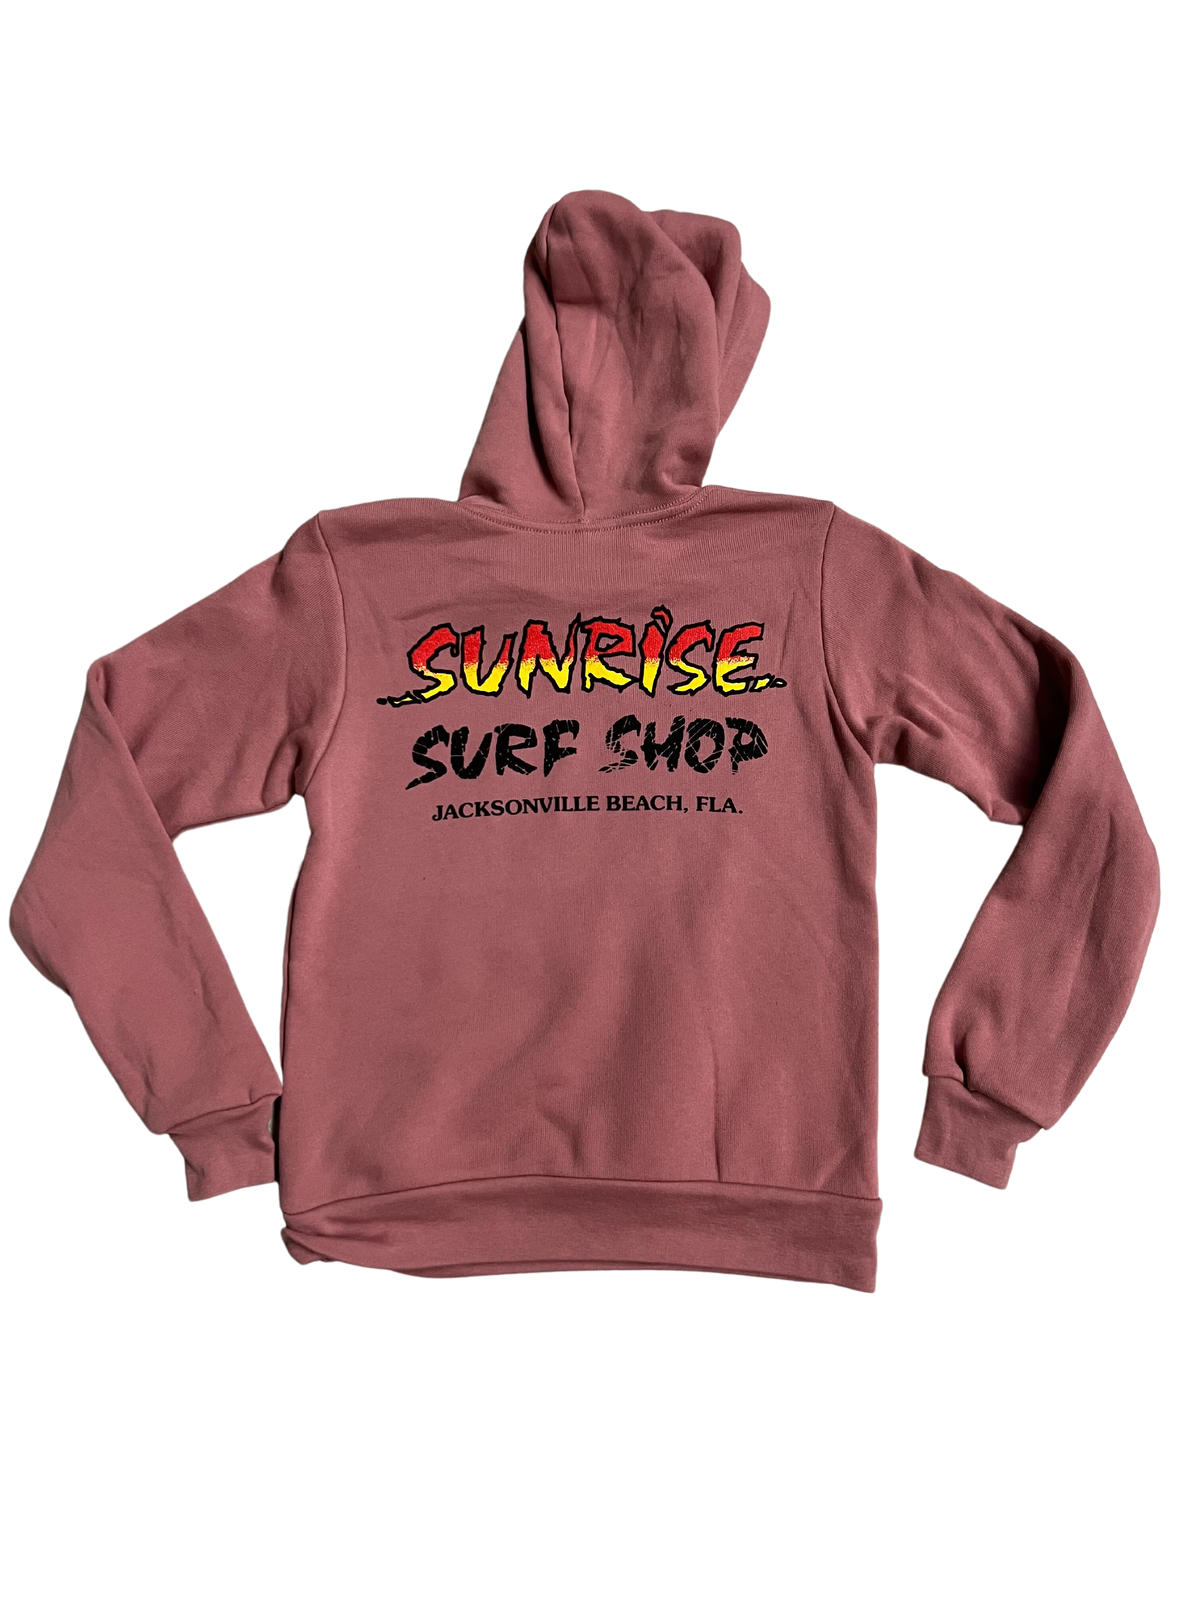 Sunrise Surf Shop Youth Pullover Sweatshirt